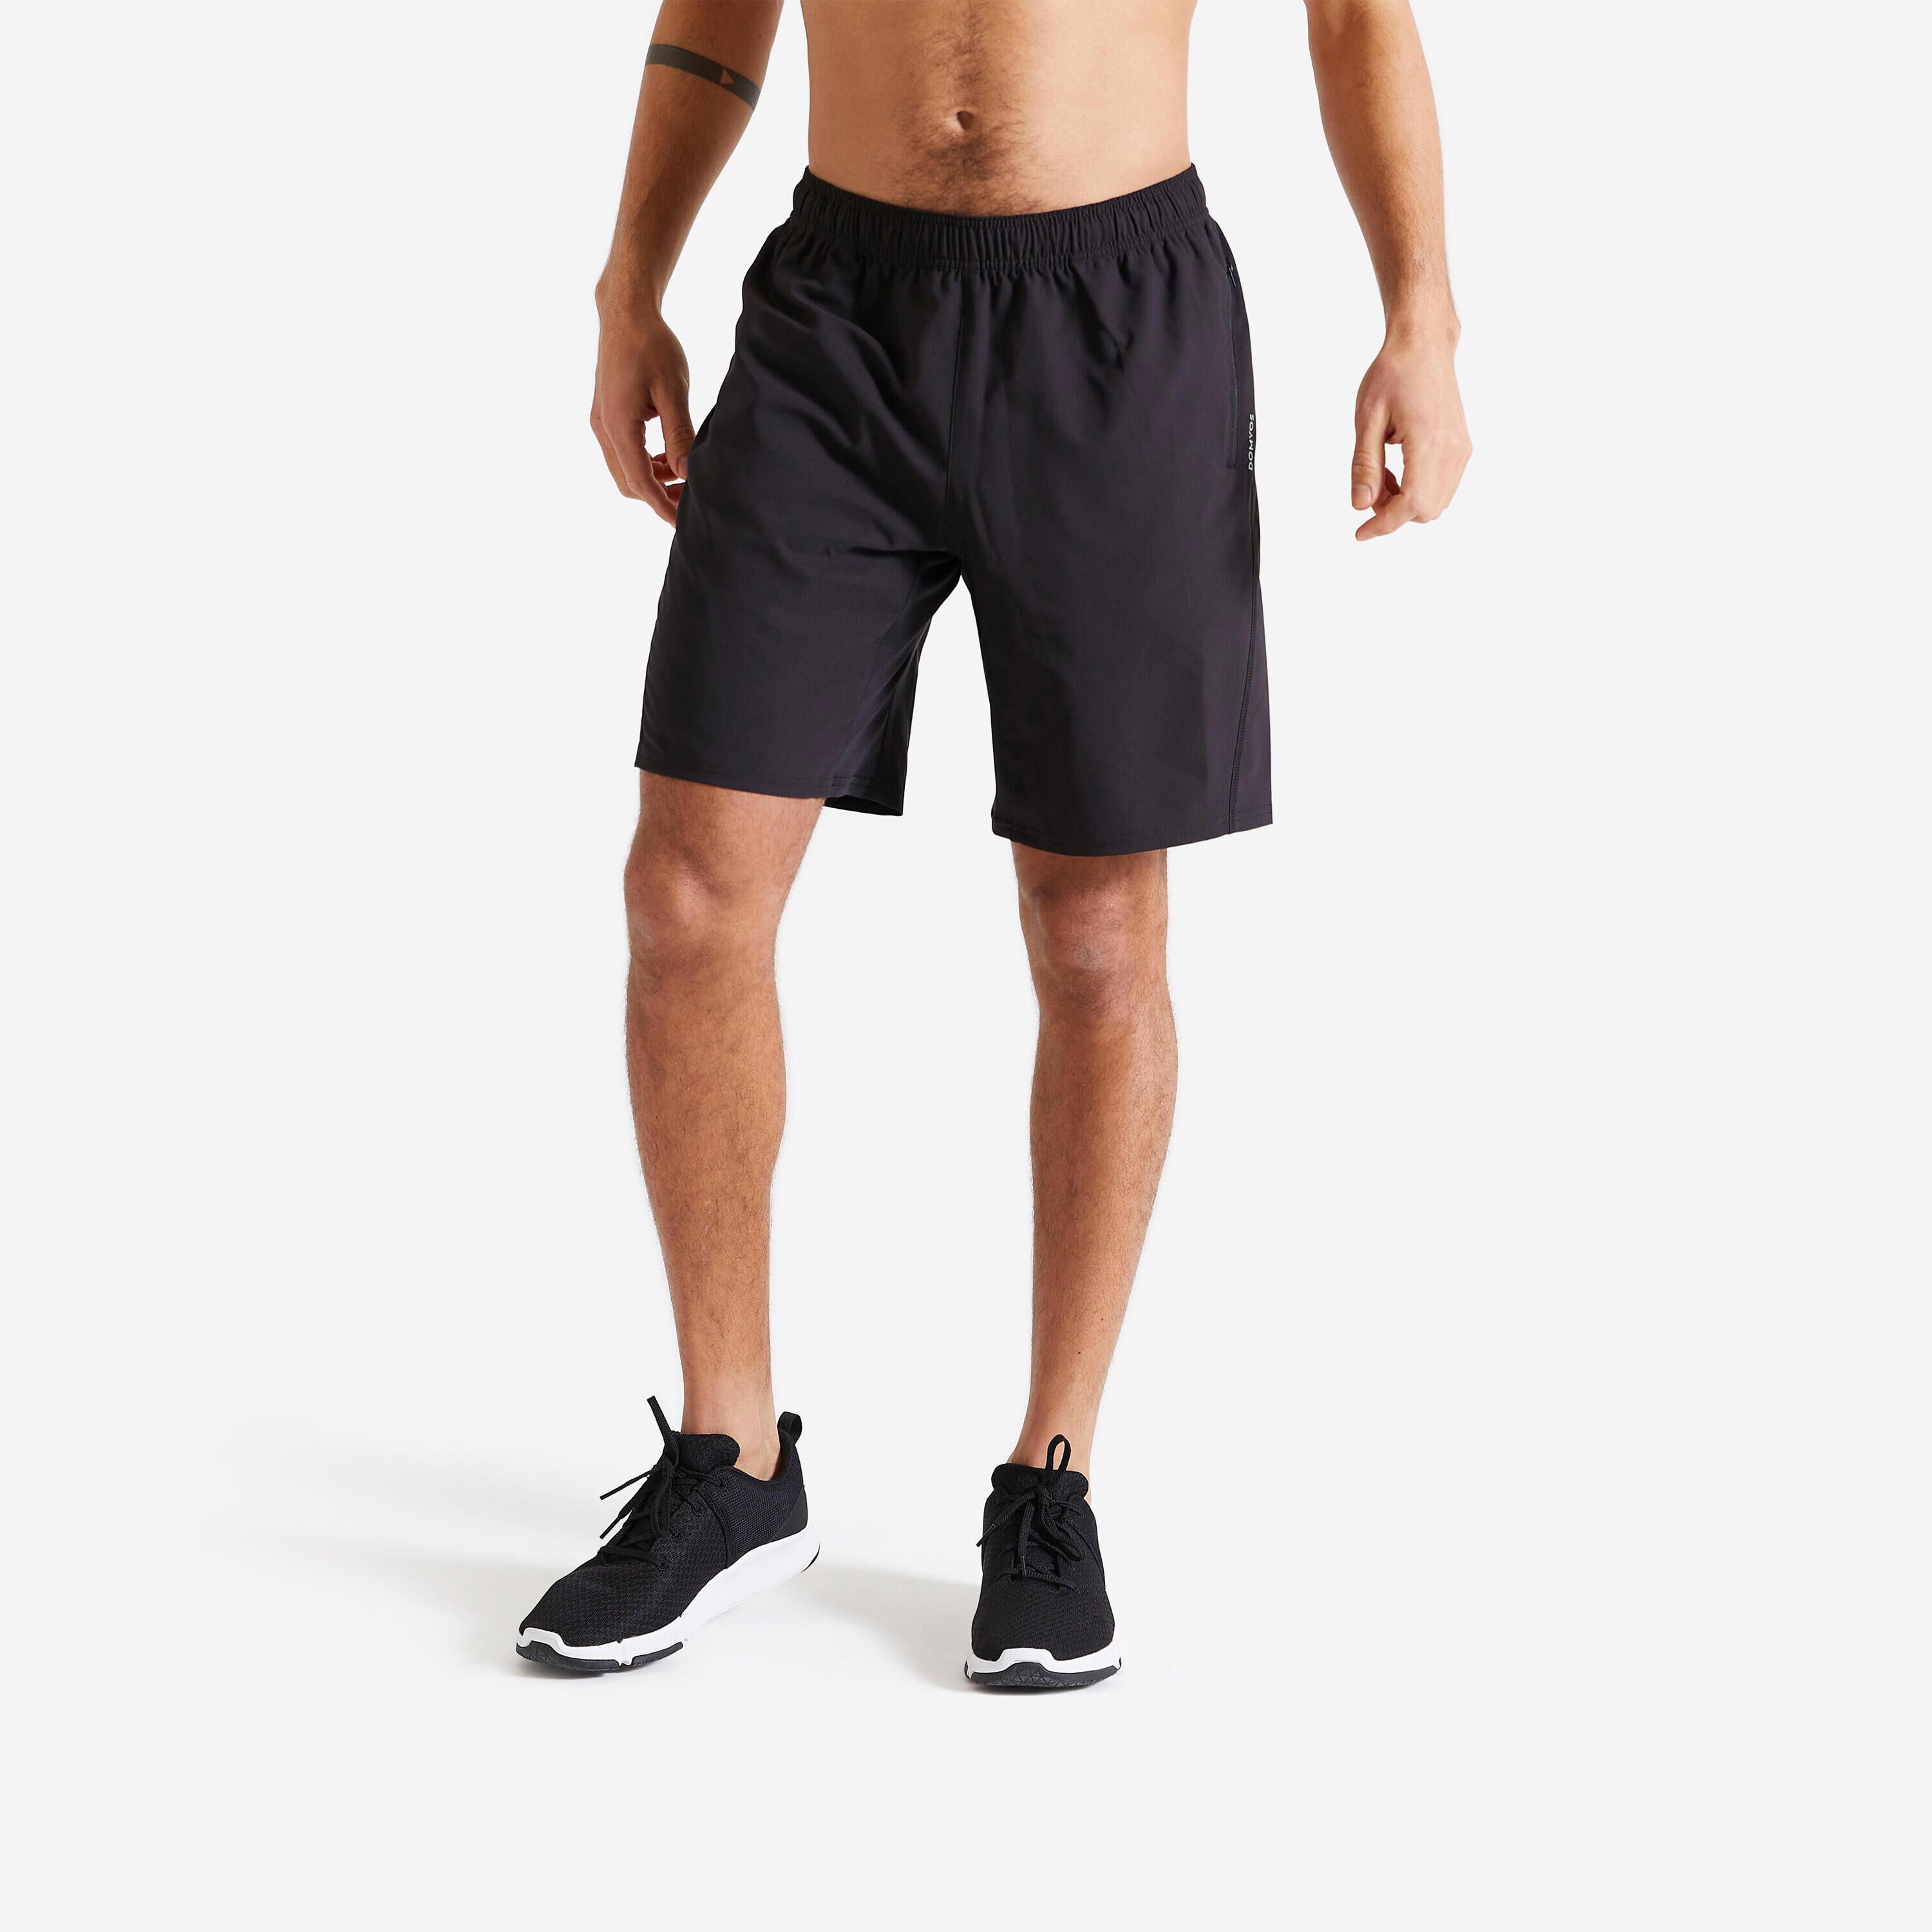 DOMYOS Men's Zip Pocket Breathable Essential Fitness Shorts - Plain Black